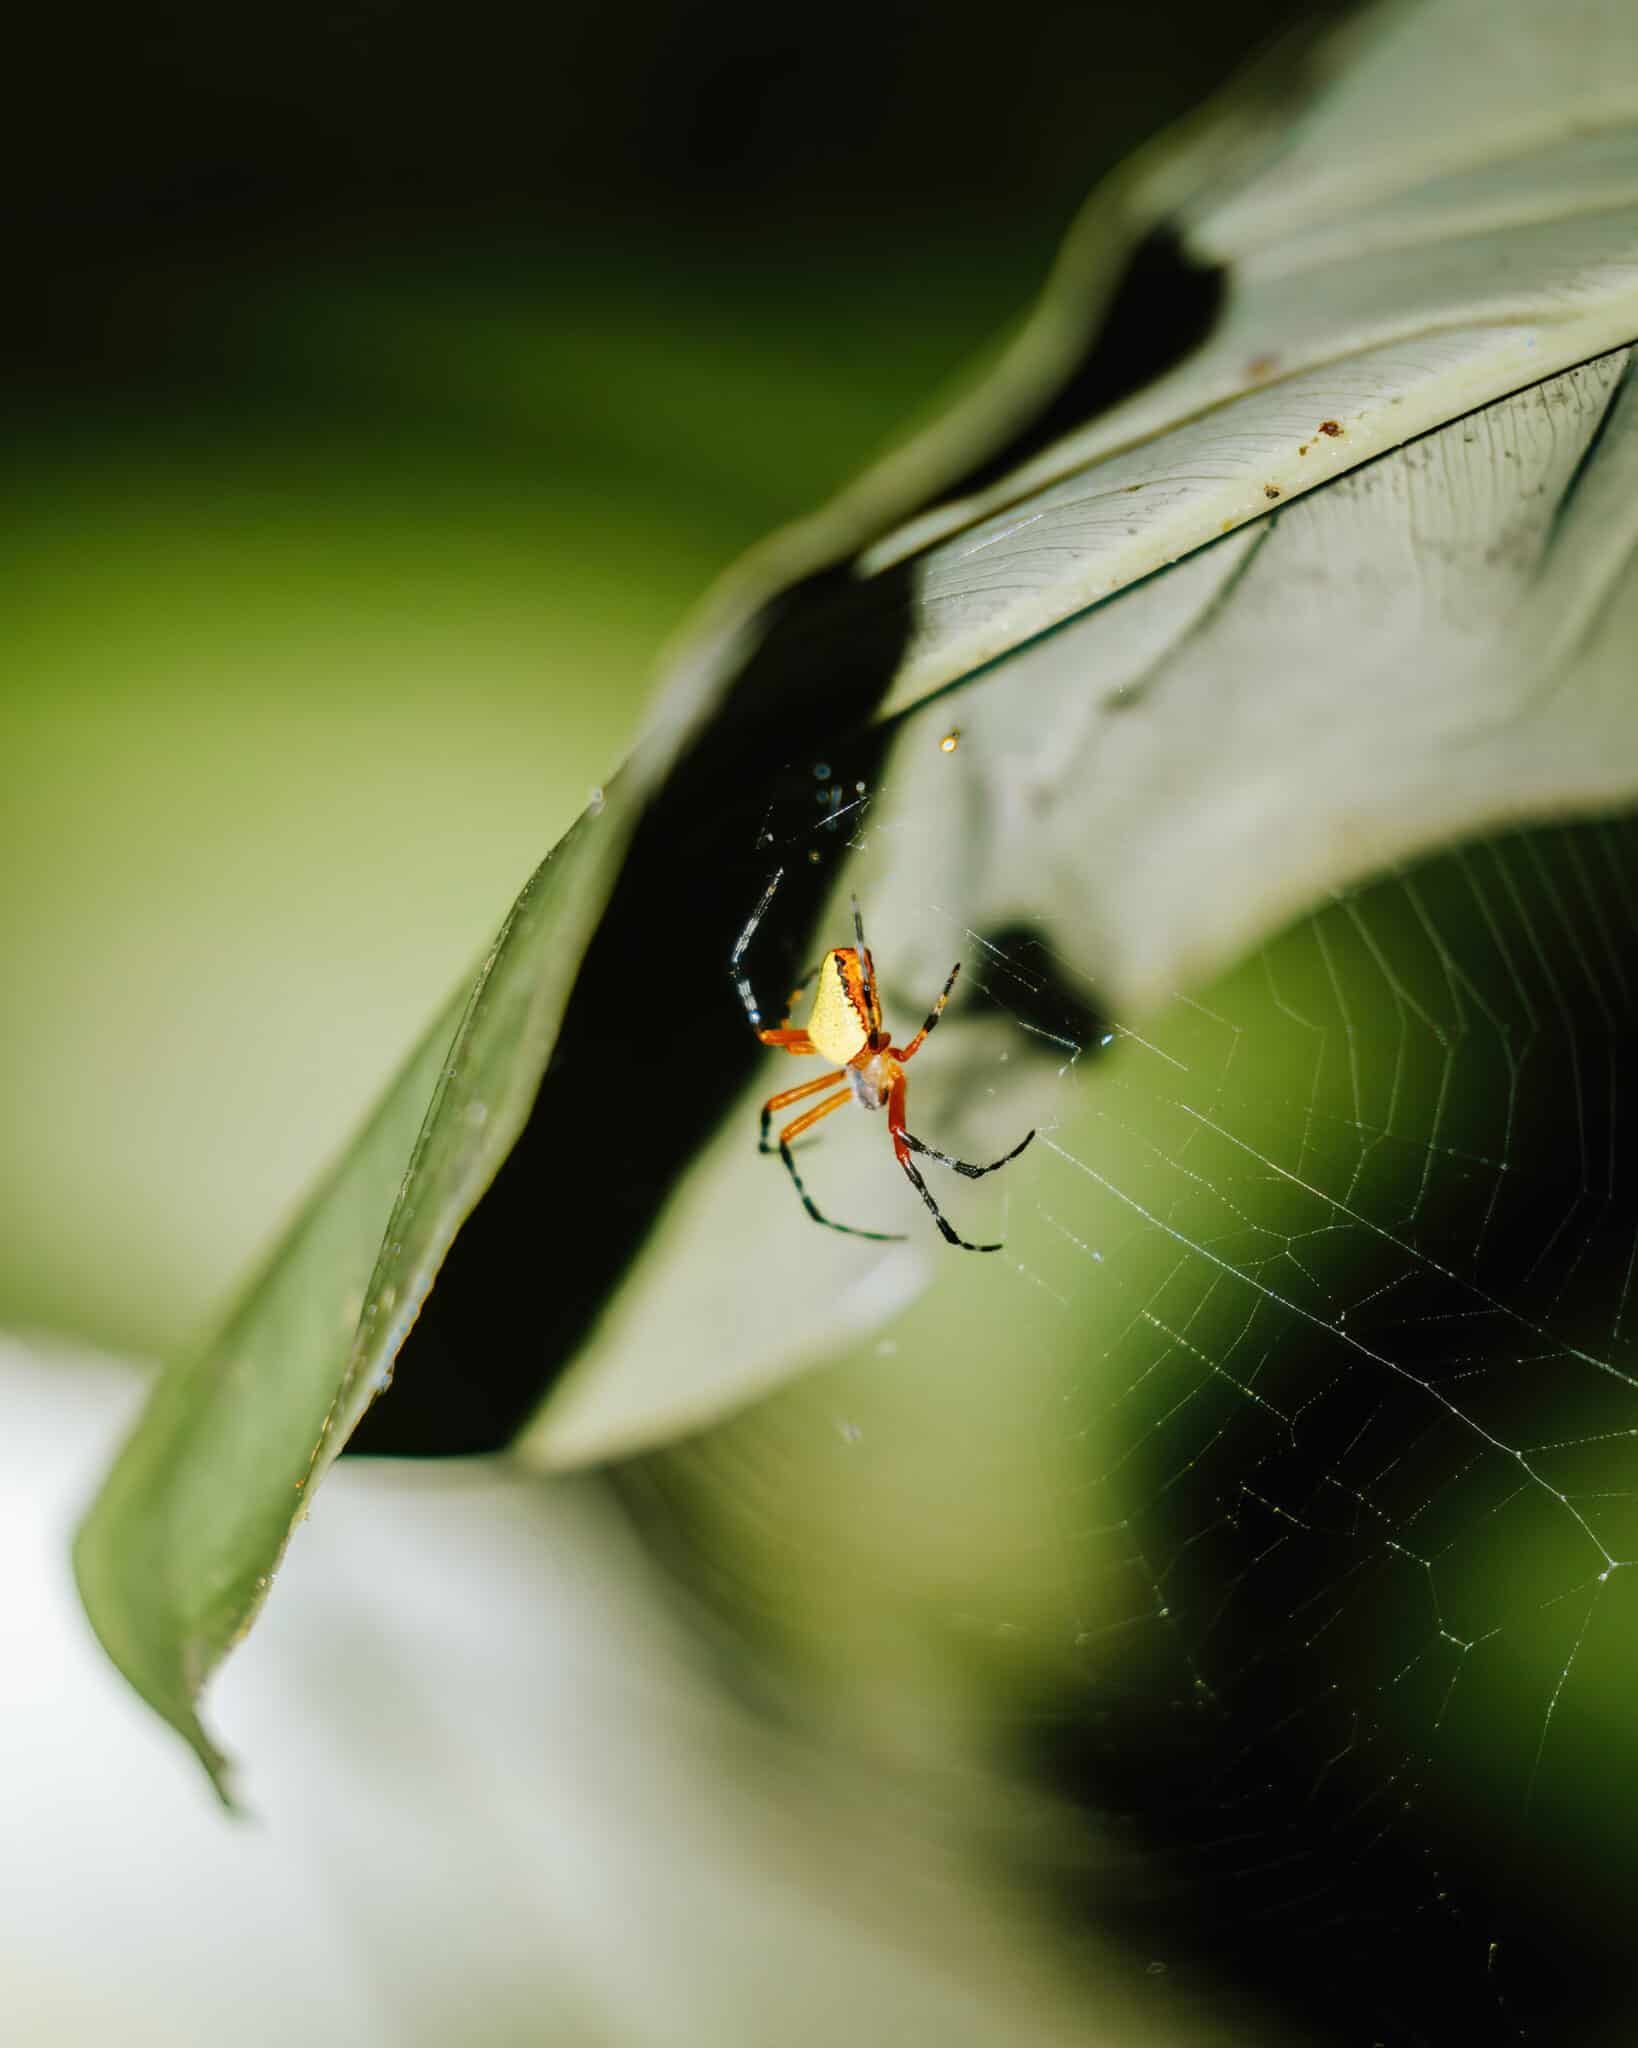 In Tortuguero, Costa Rica, a spider perches on a leaf.